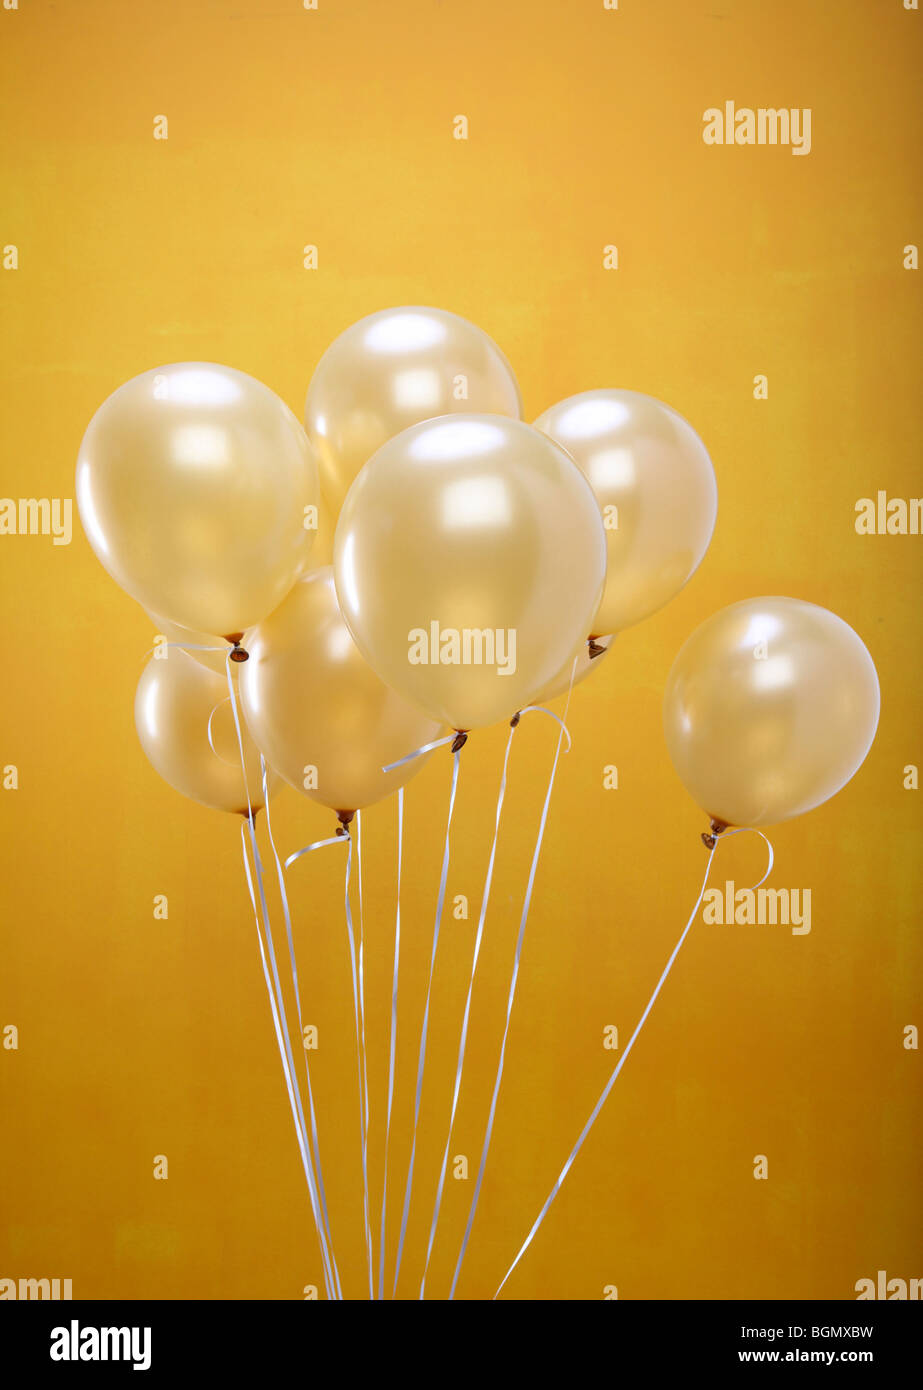 gold balloons yellow wall Stock Photo